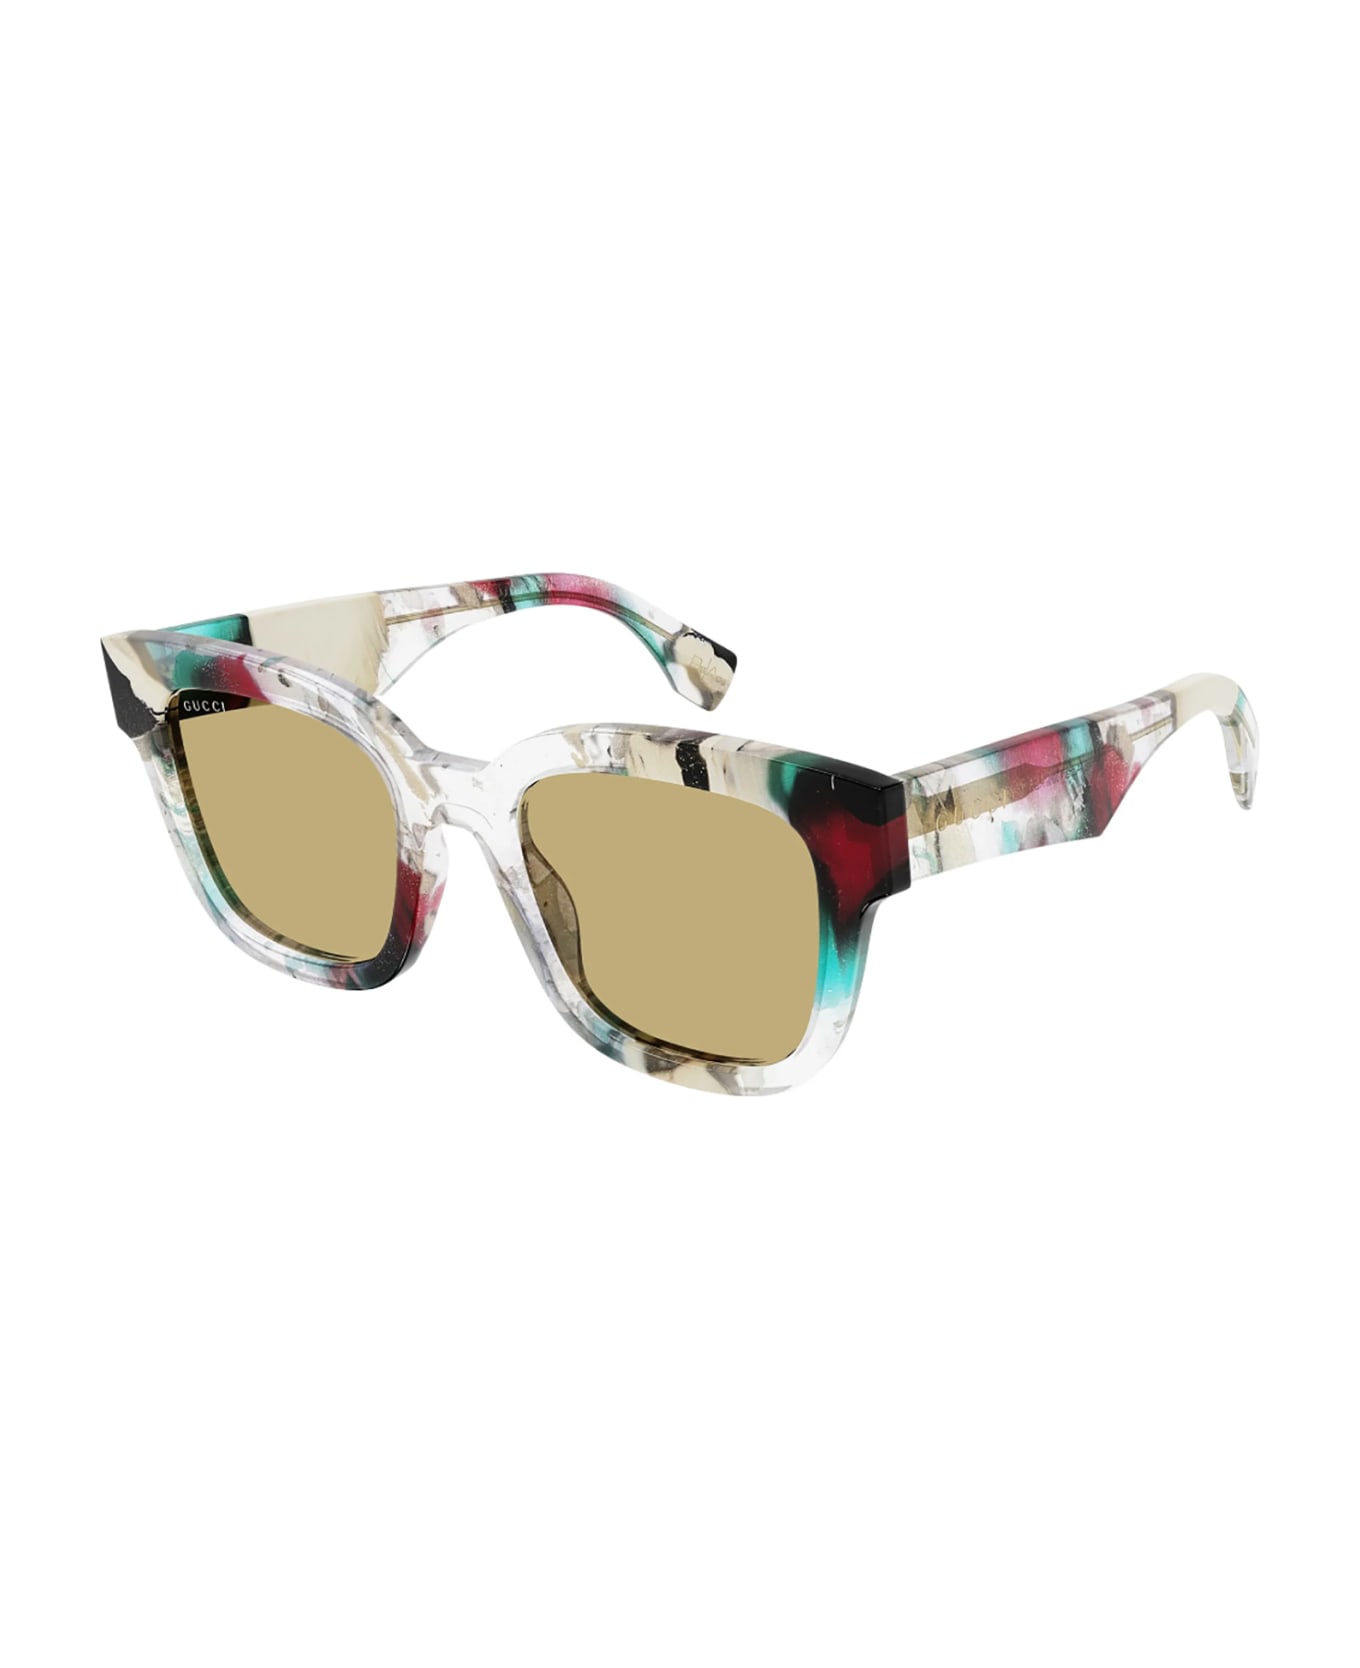 Gucci Eyewear GG1624S Sunglasses - Multicolor Multicolor